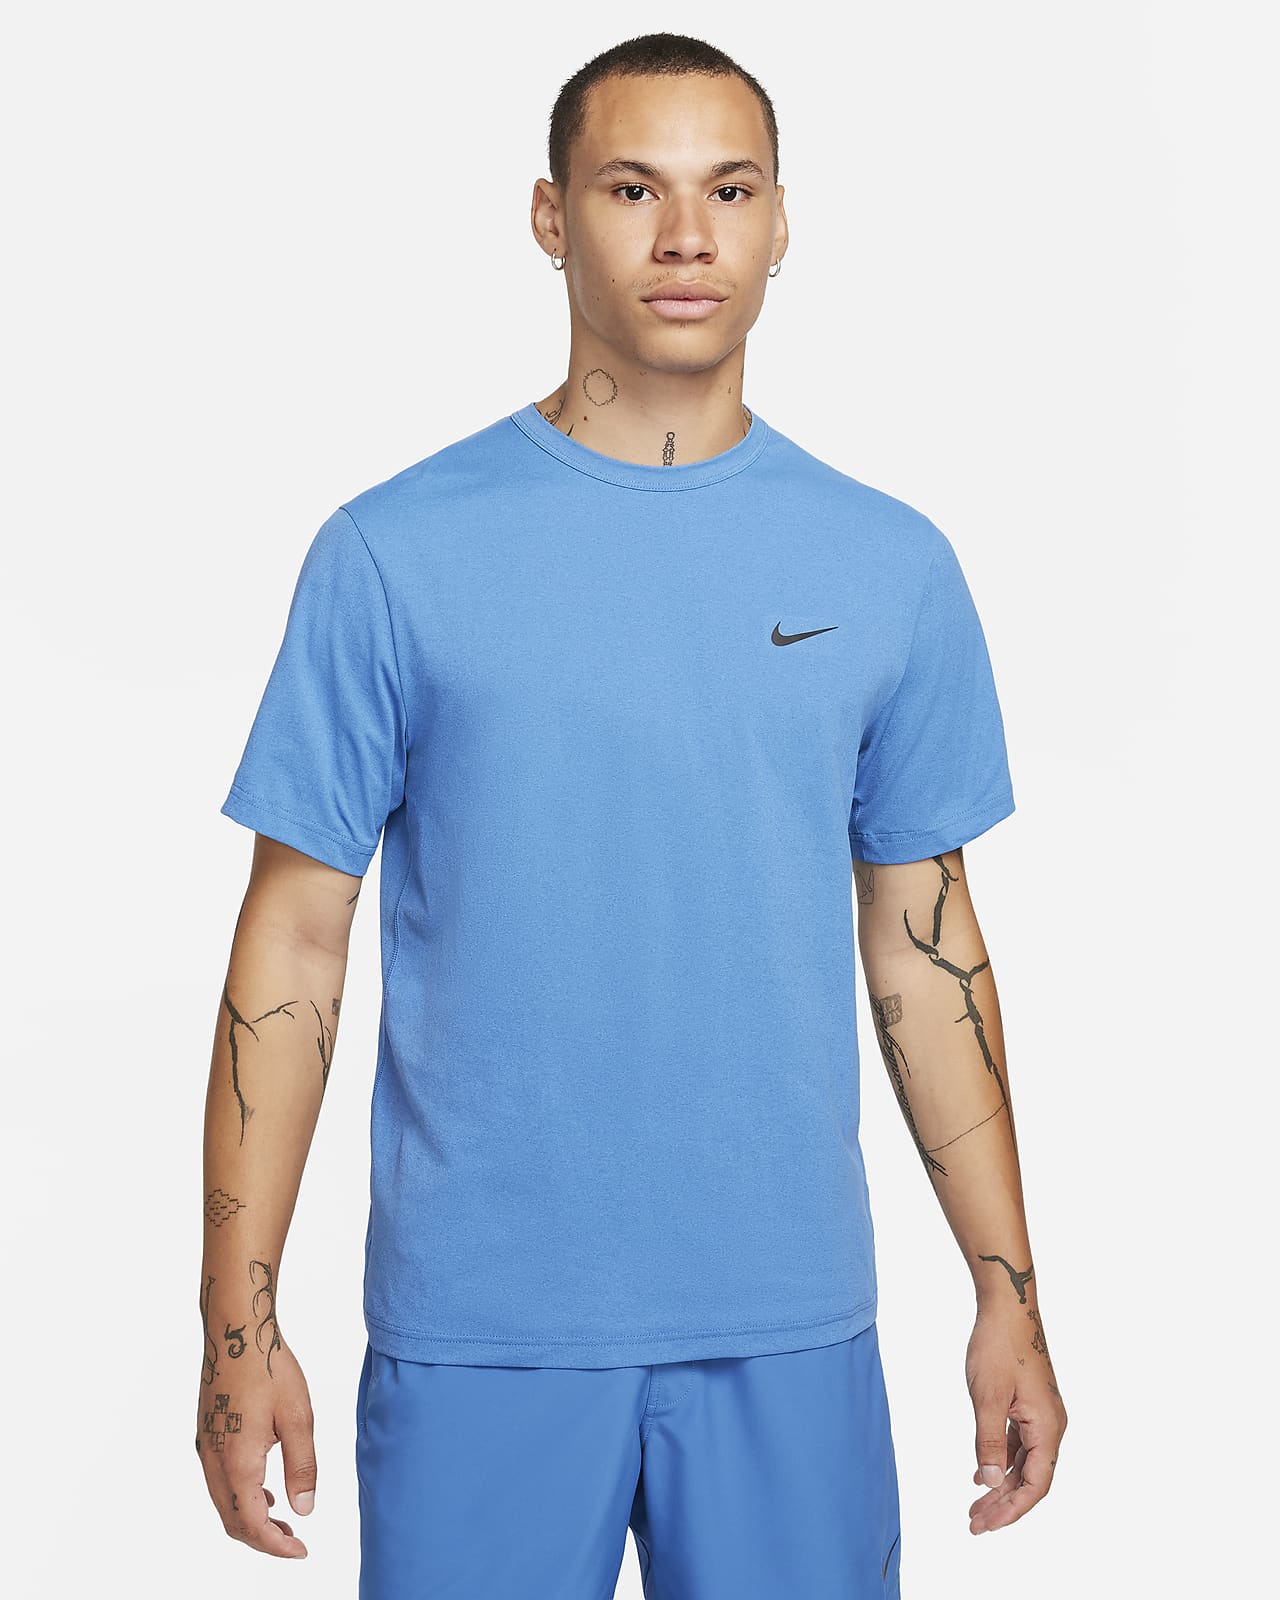 Nike Hyverse Dri-FIT UV rövid ujjú, sokoldalú férfifelső